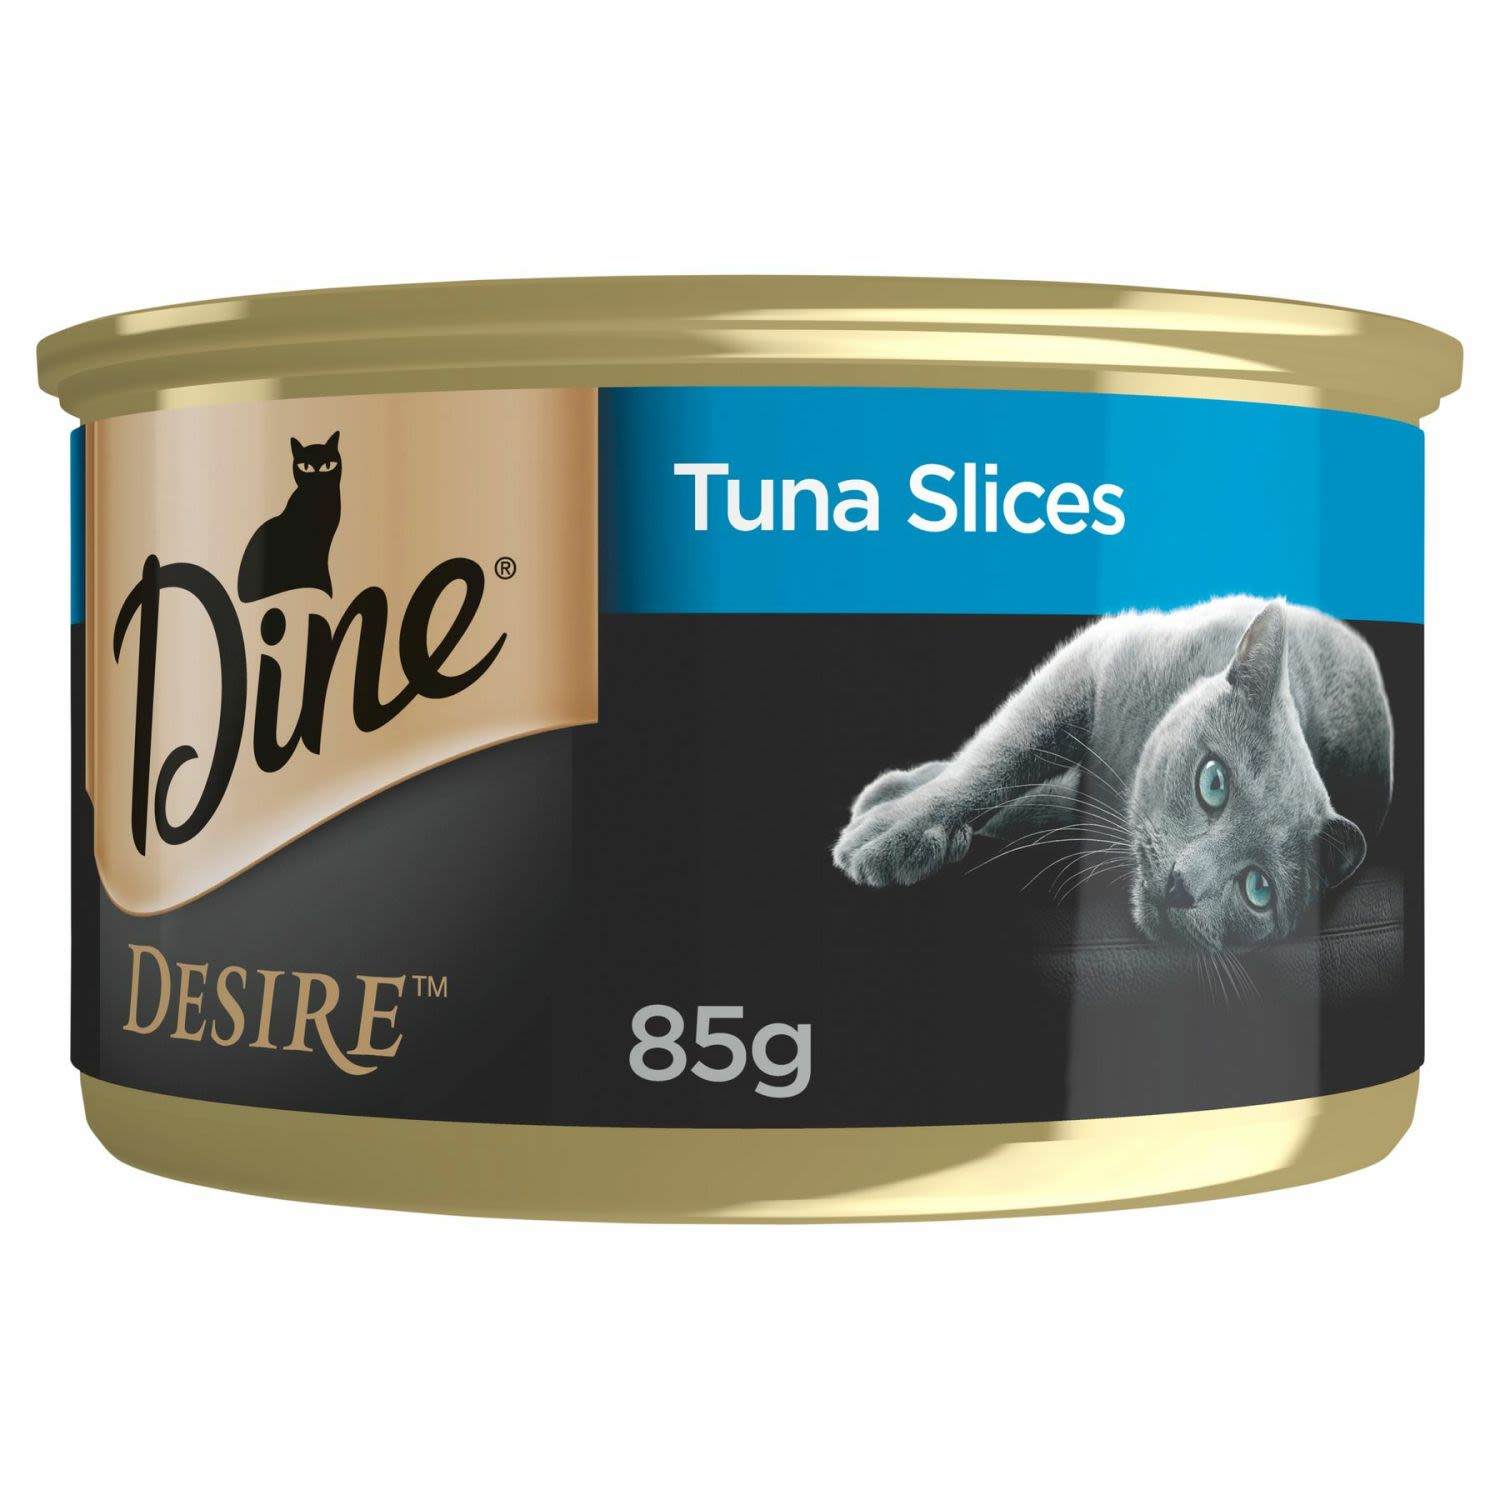 Dine Desire Adult Cat Food Tuna Slices In A Light Jus, 85 Gram